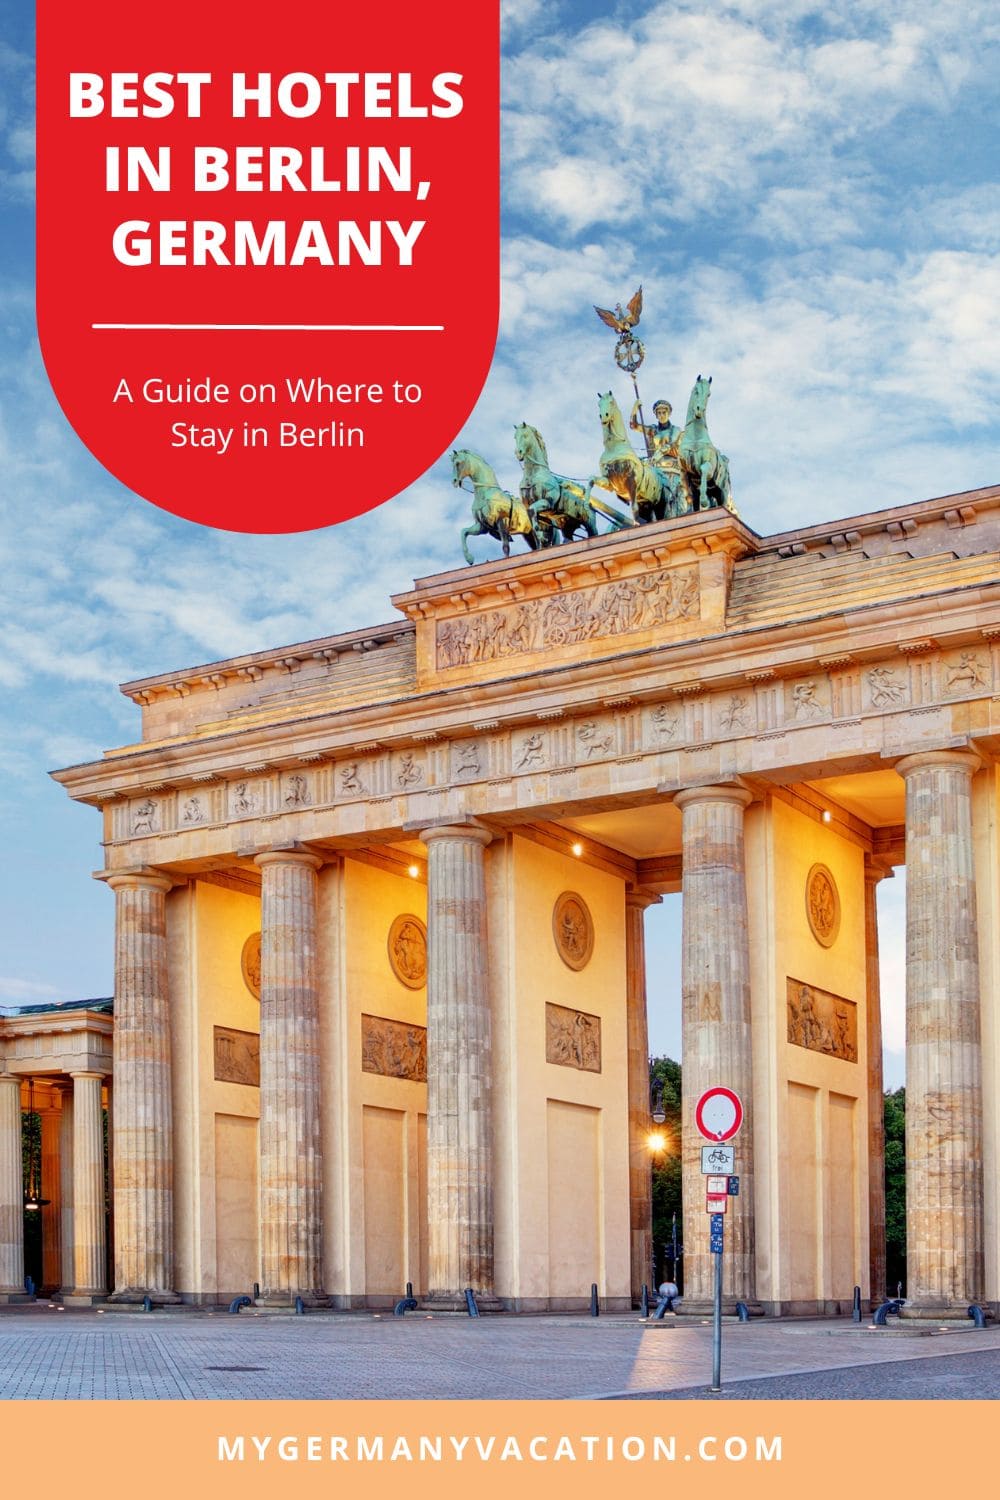 Image of Best Hotels in Berlin, Germany guide